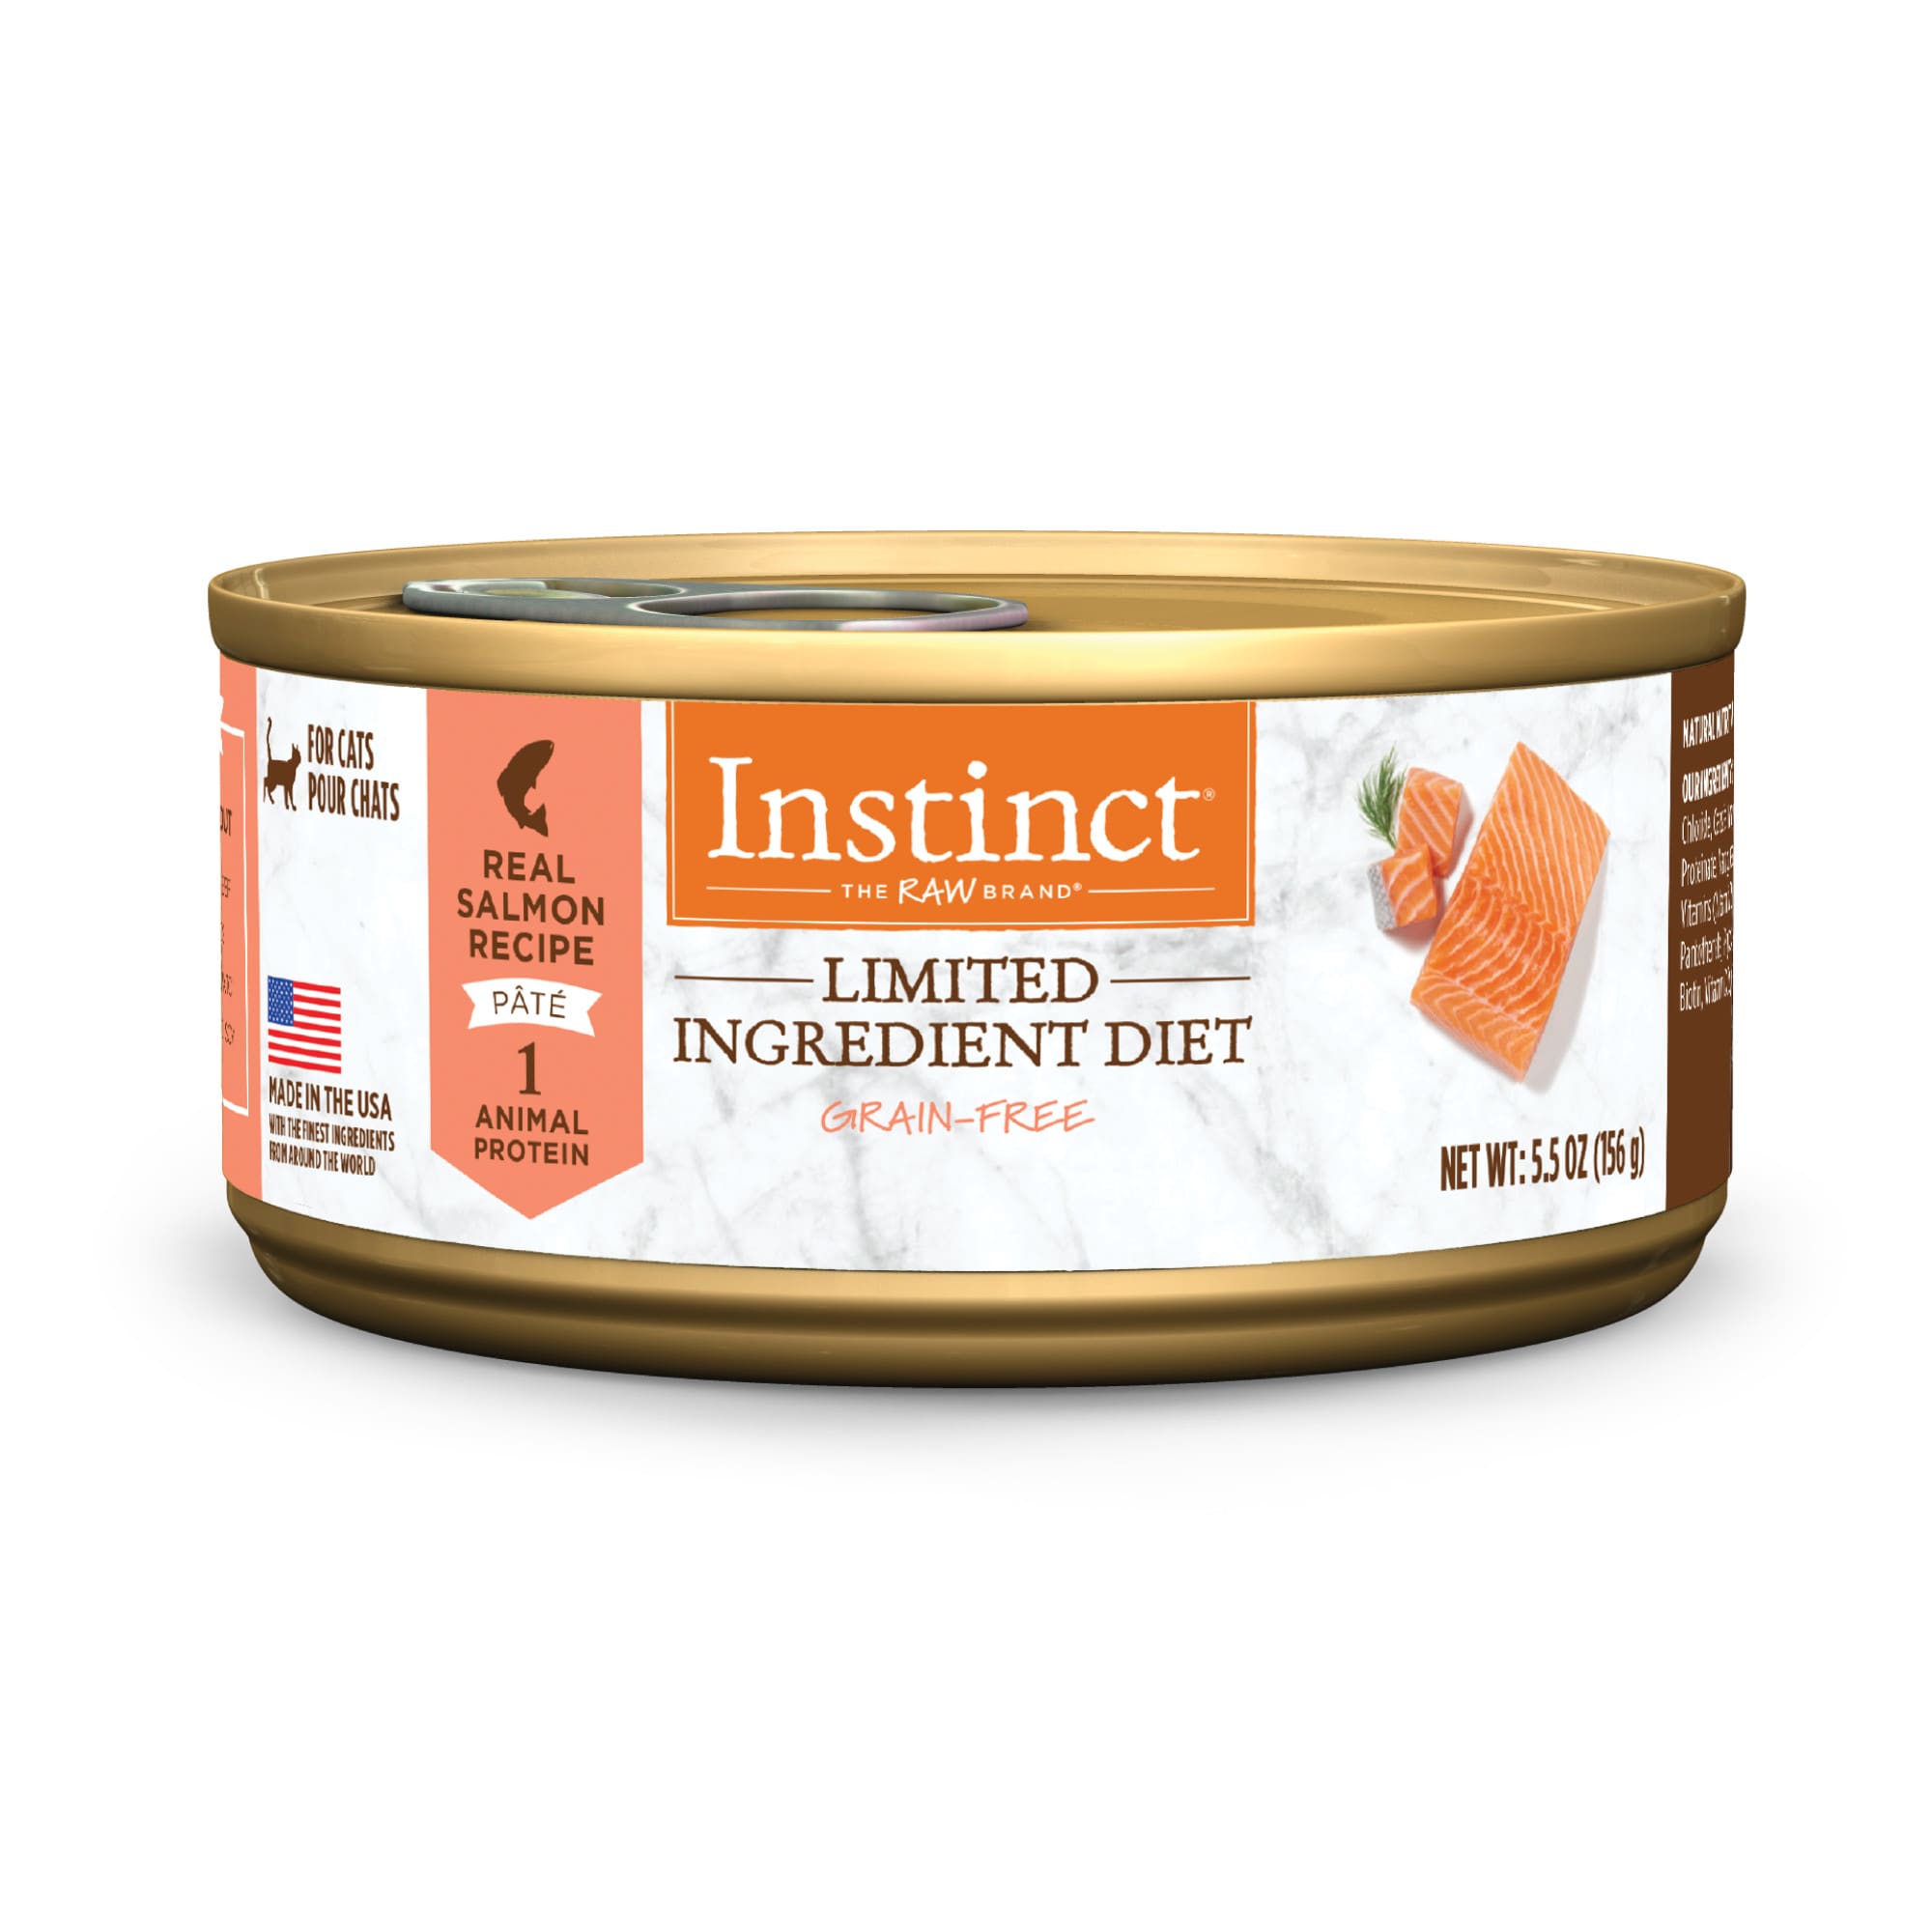 Instinct Limited Ingredient Diet GrainFree Pate Real Salmon Recipe Wet